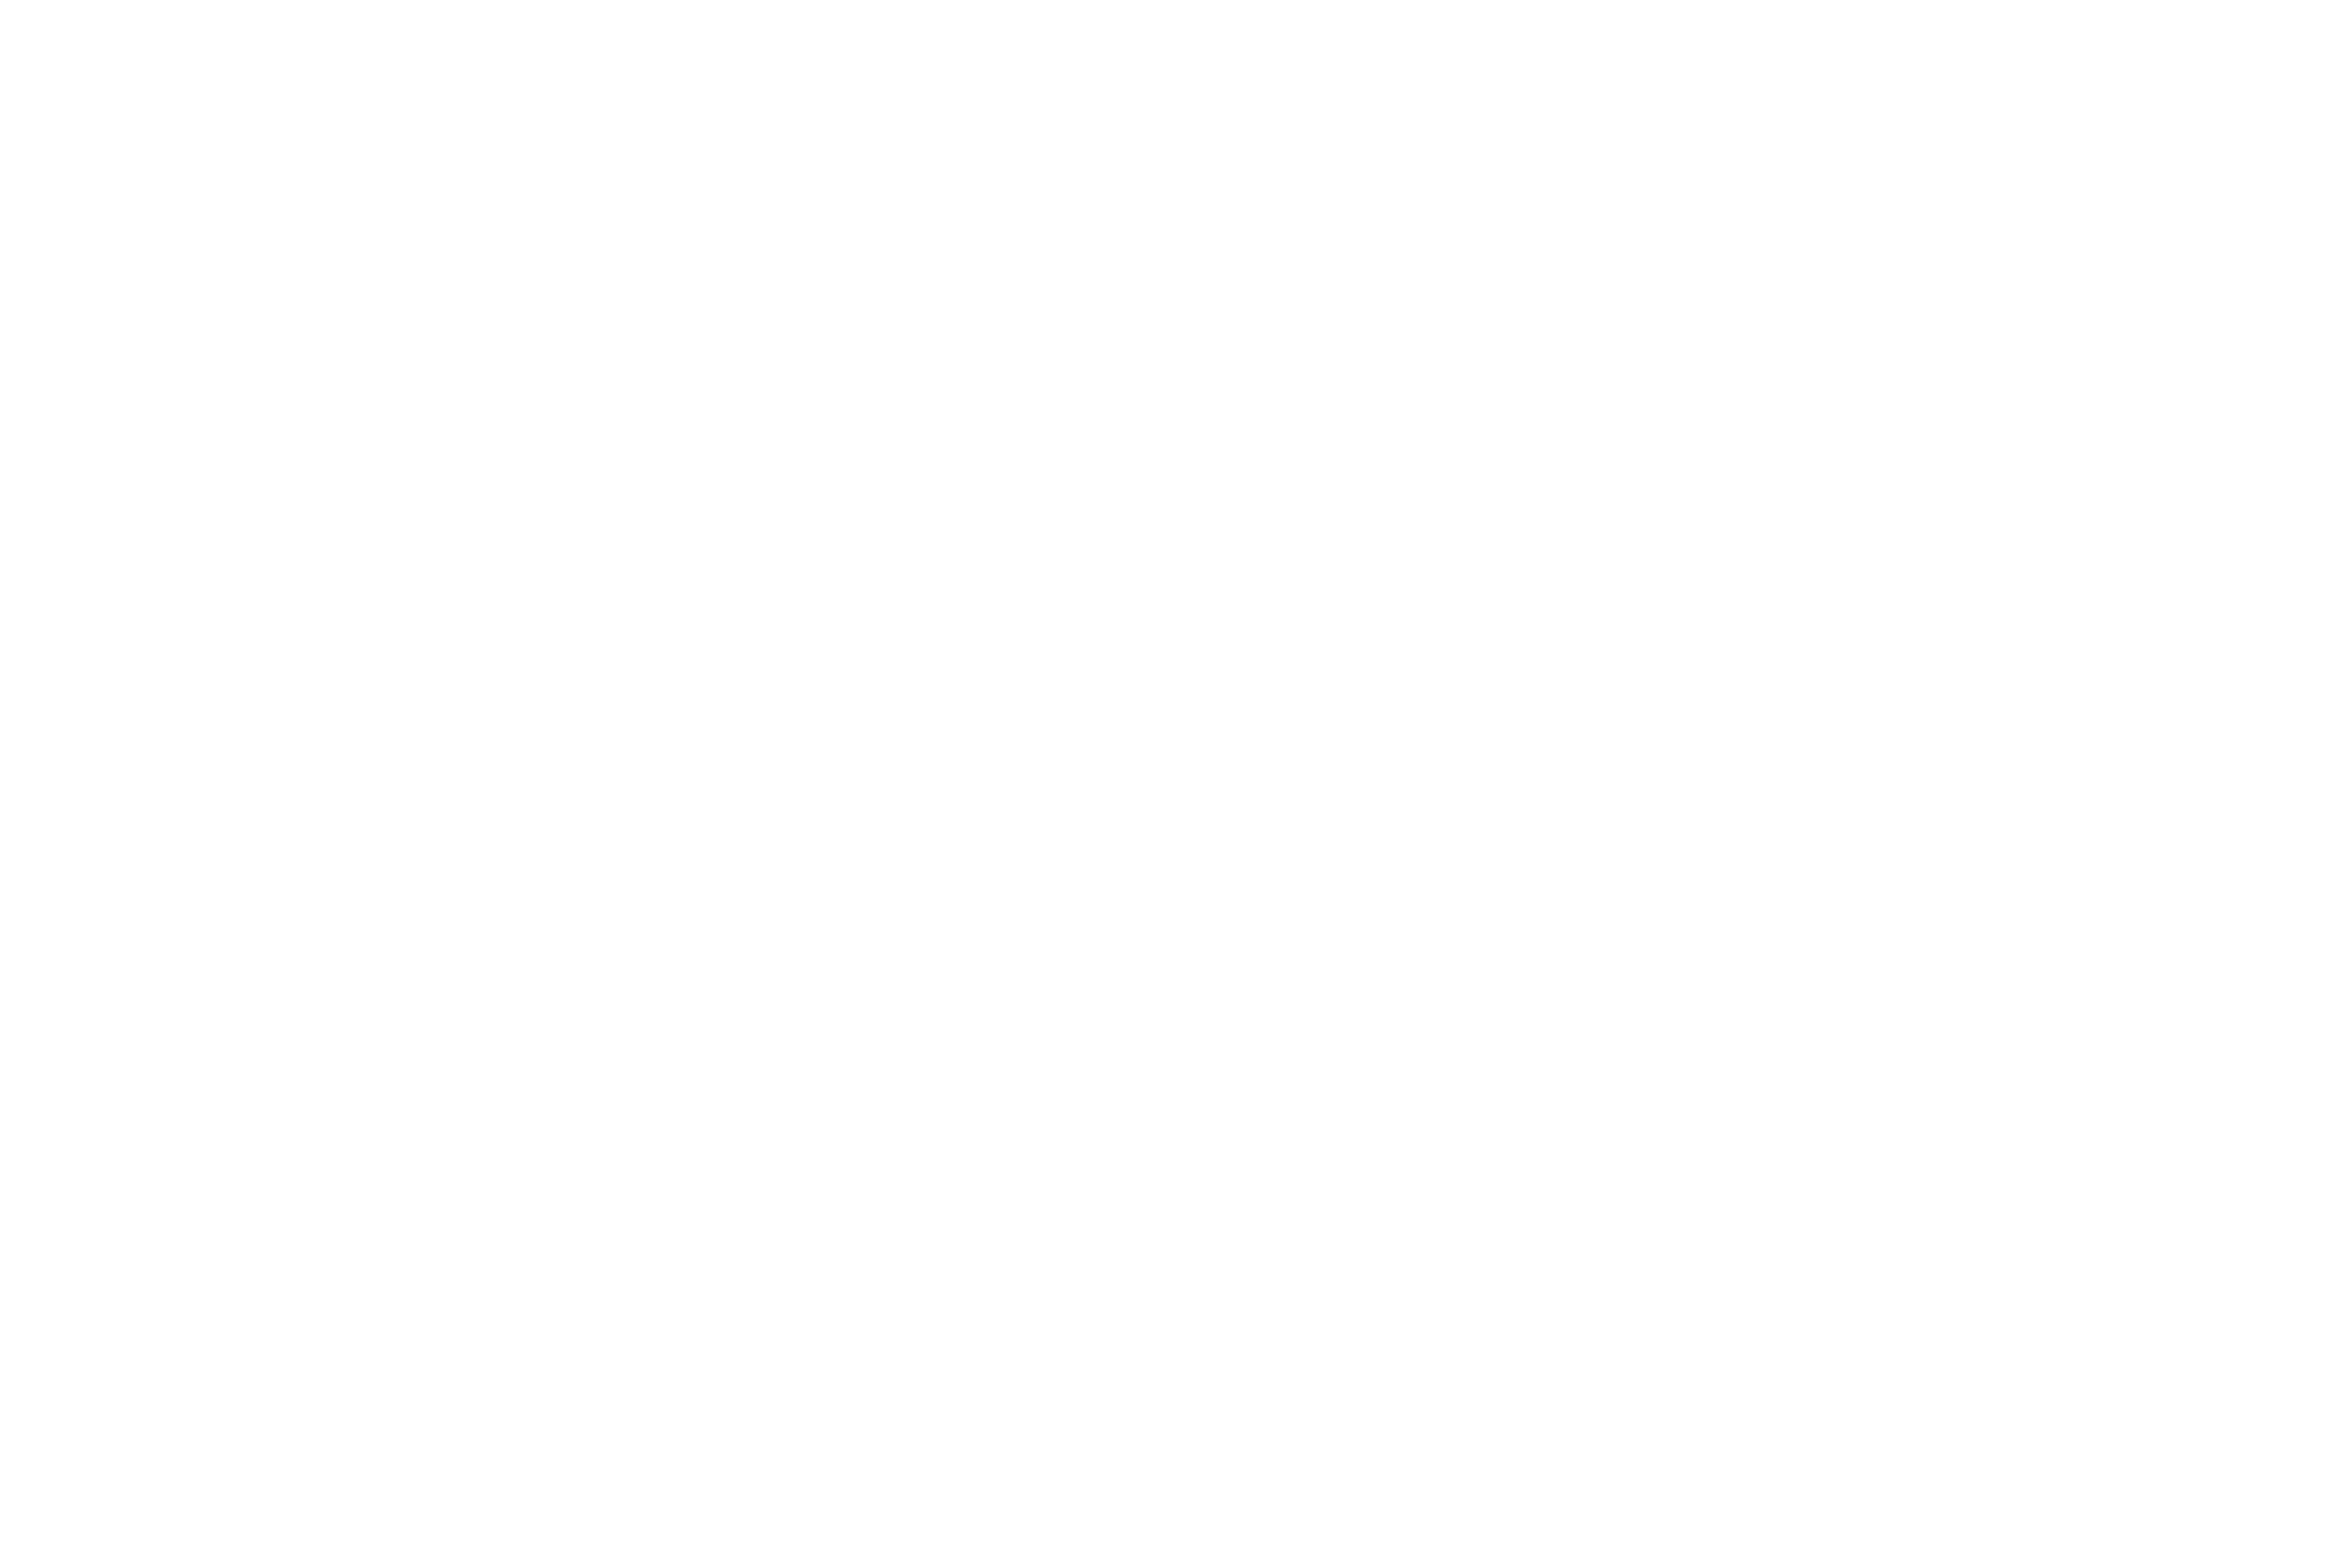 AndrewQuinnPhotography.com